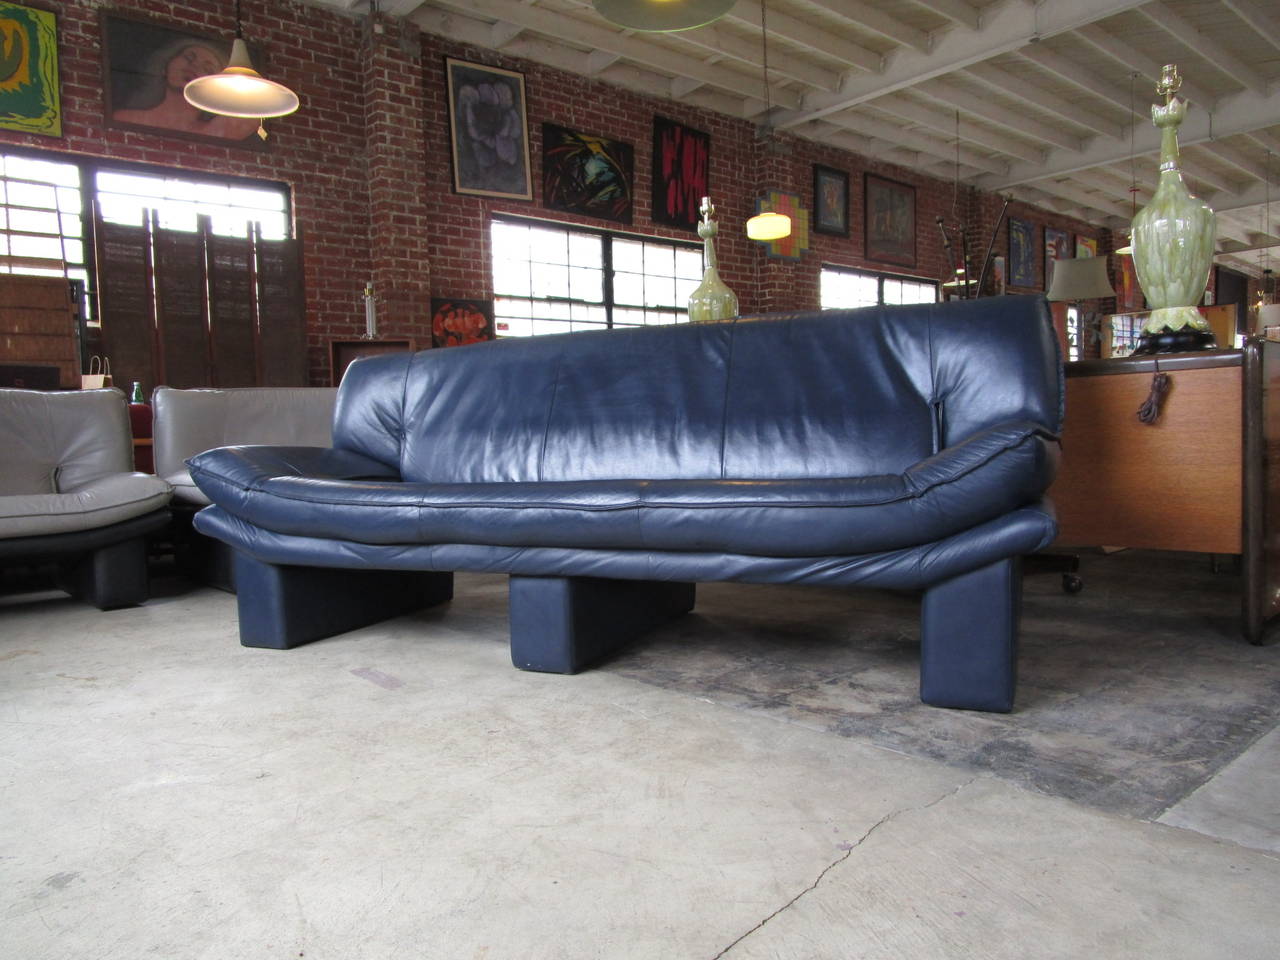 navy leather sofa